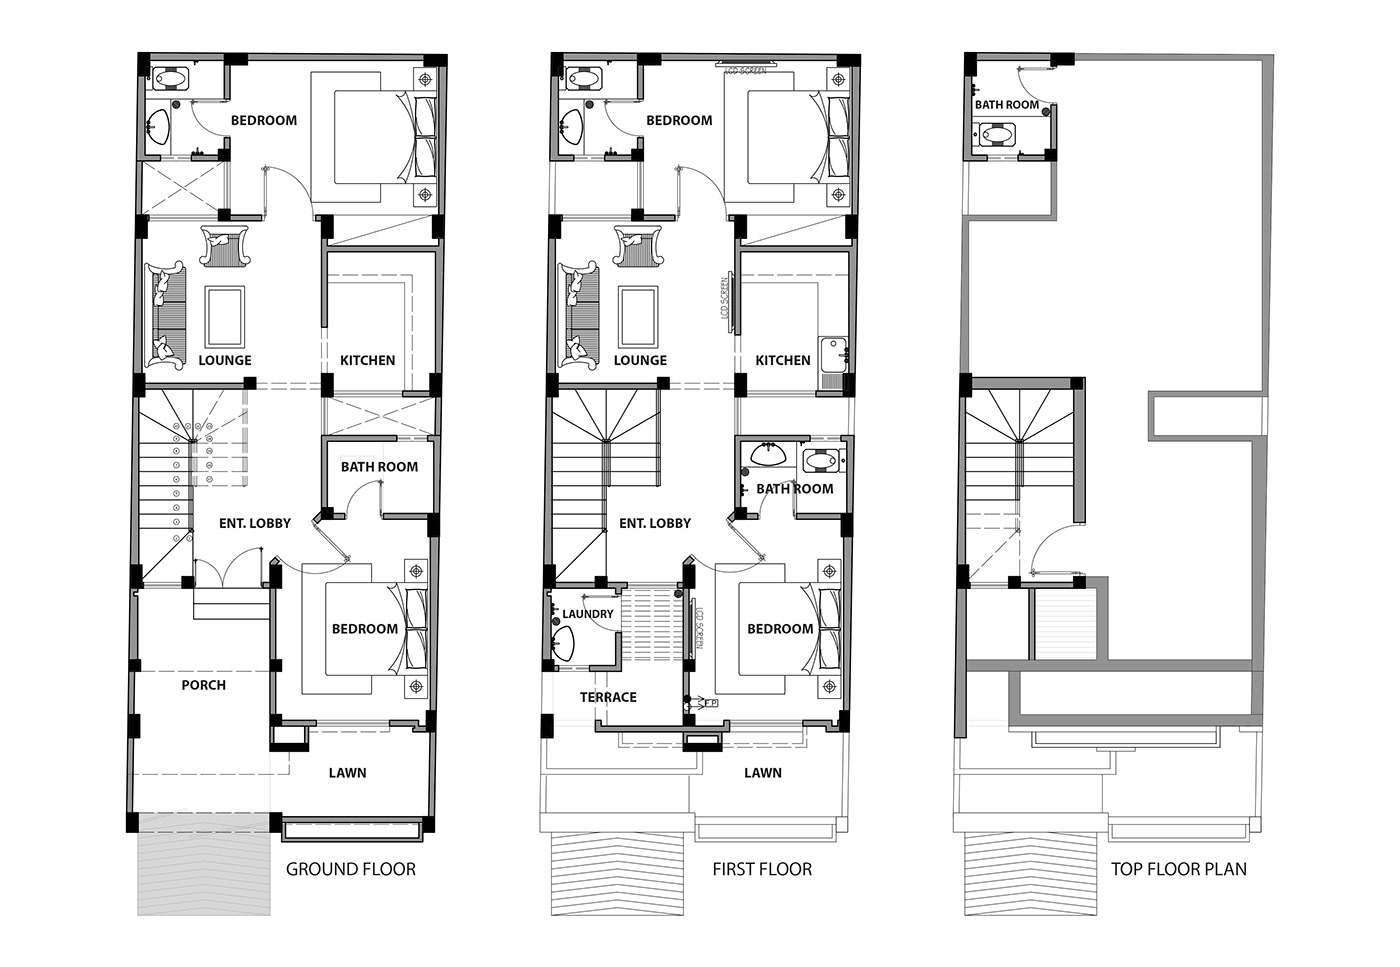 3ds max architecture archviz CGI corona render  exterior design HOUSE DESIGN modern house visualization khan residence